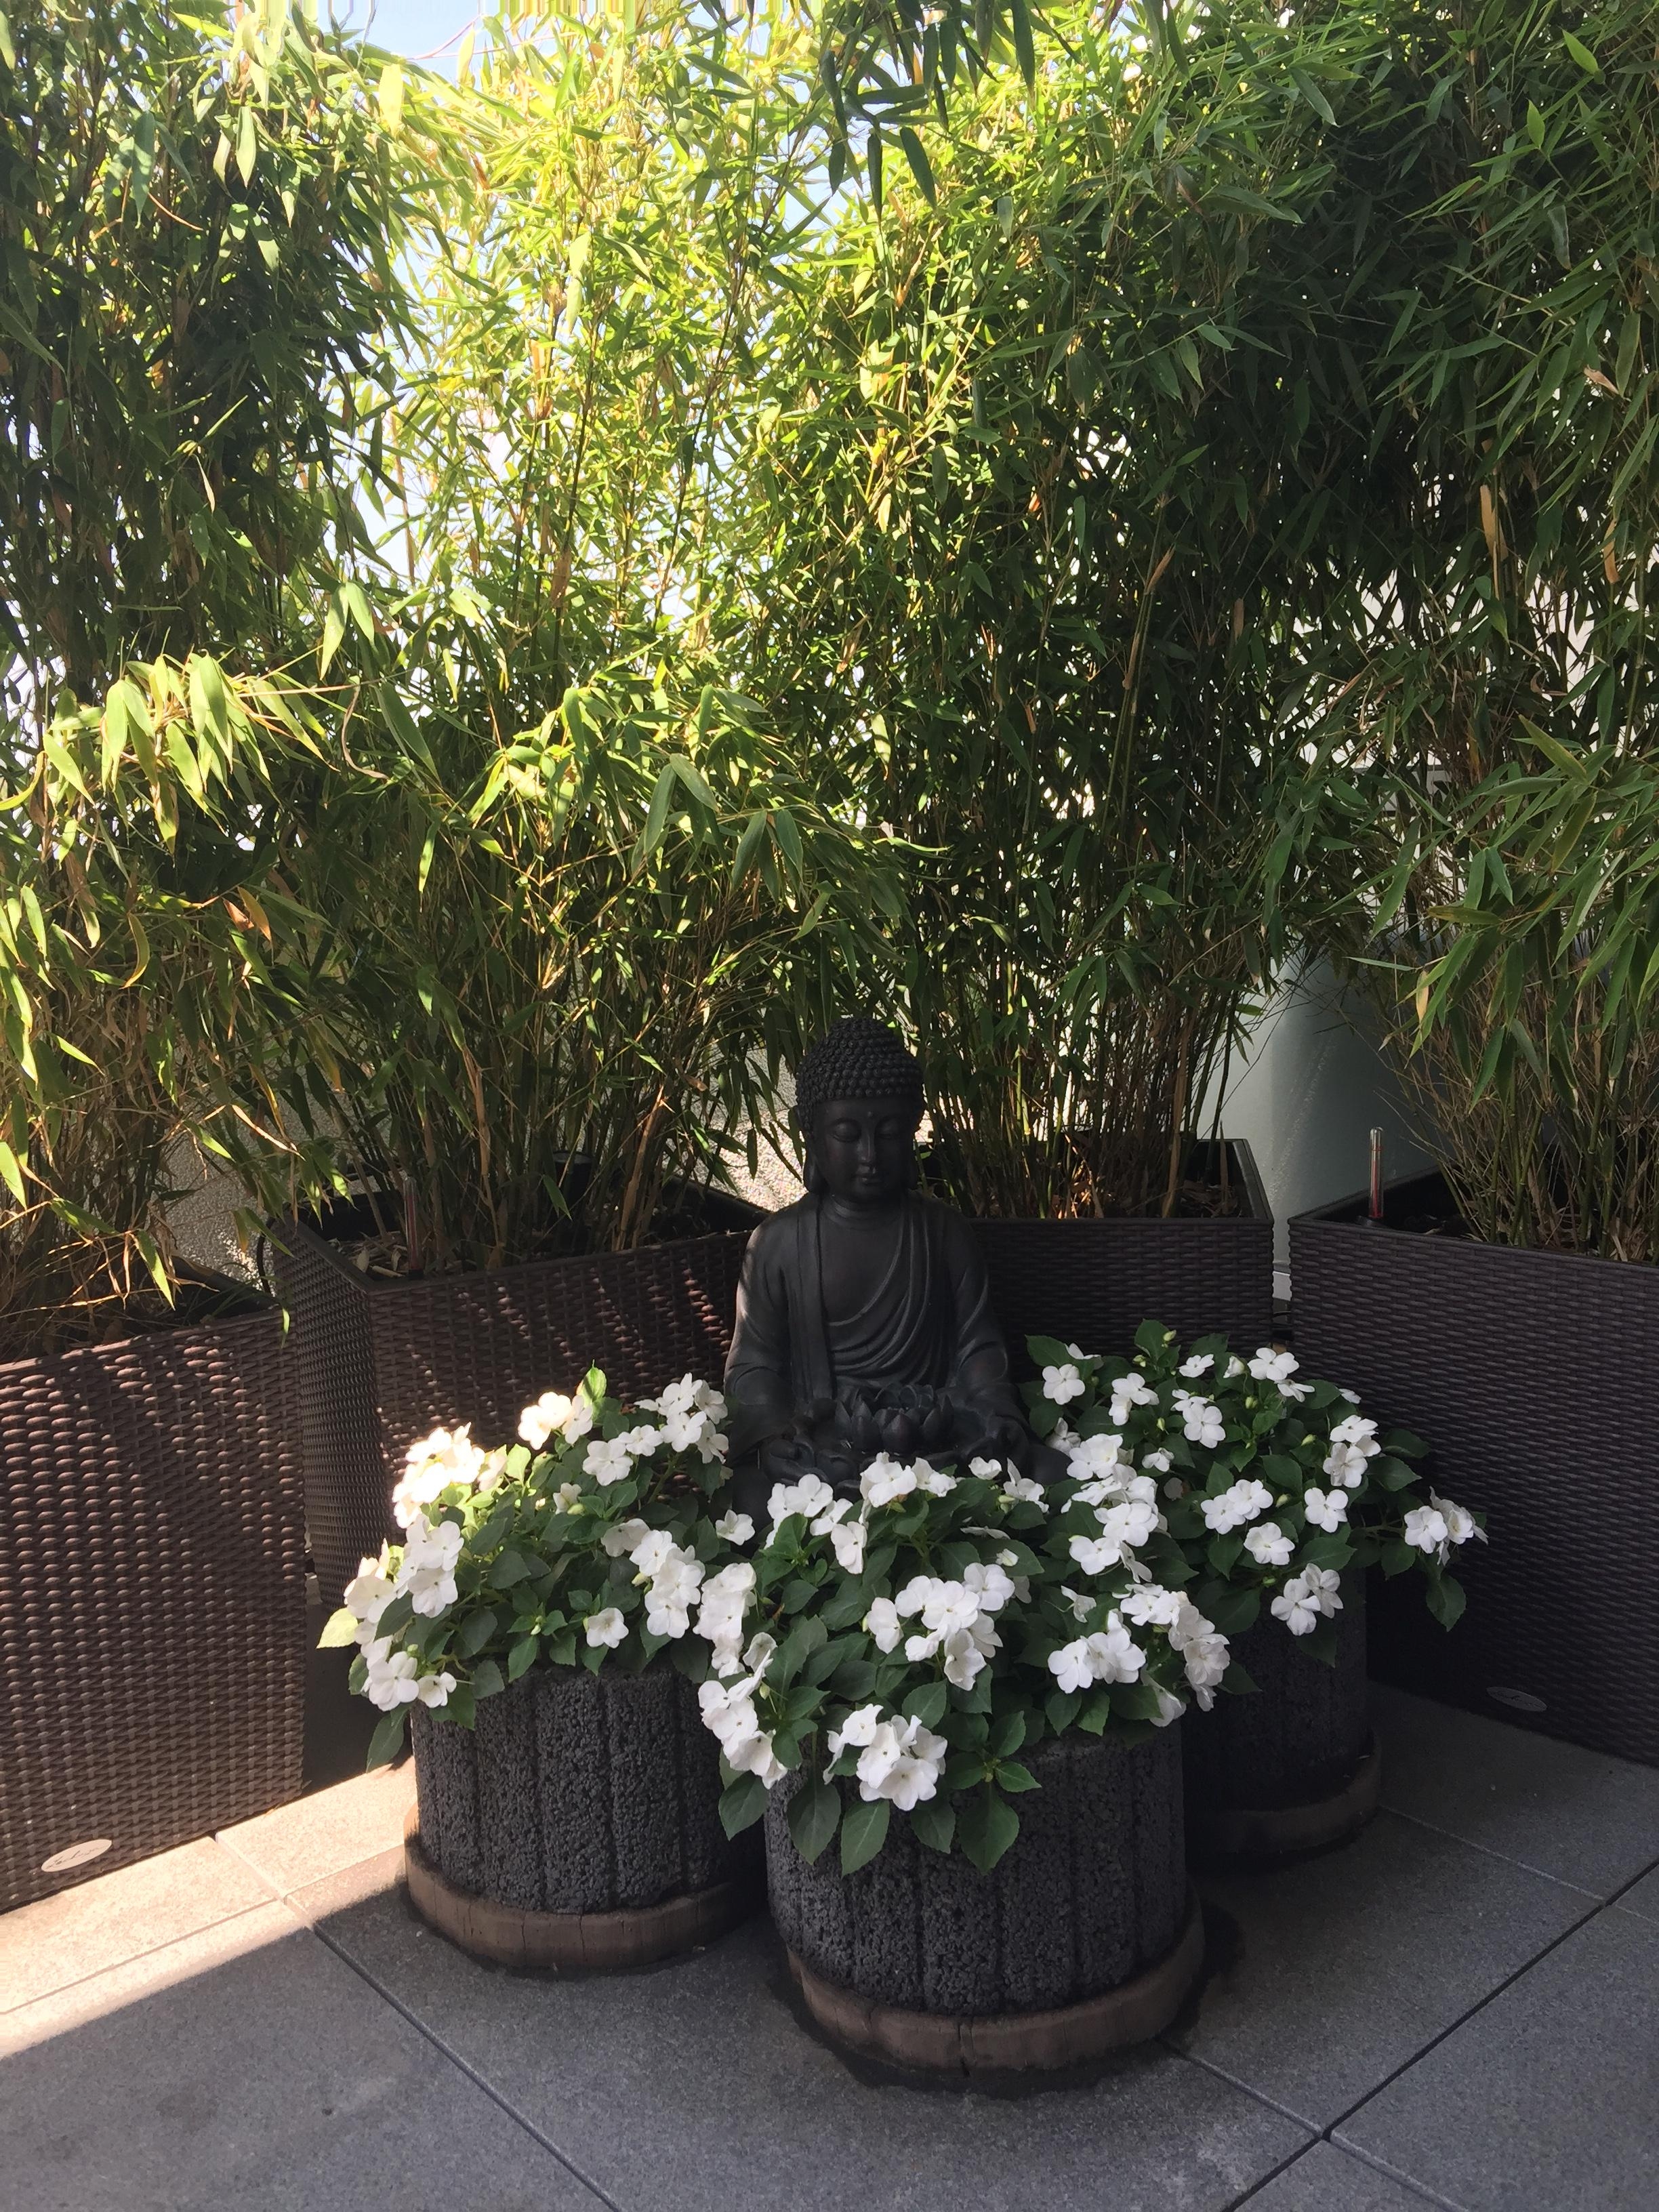 Oase der Ruhe 
#Budda#Bambus#water#chillen#
Light#